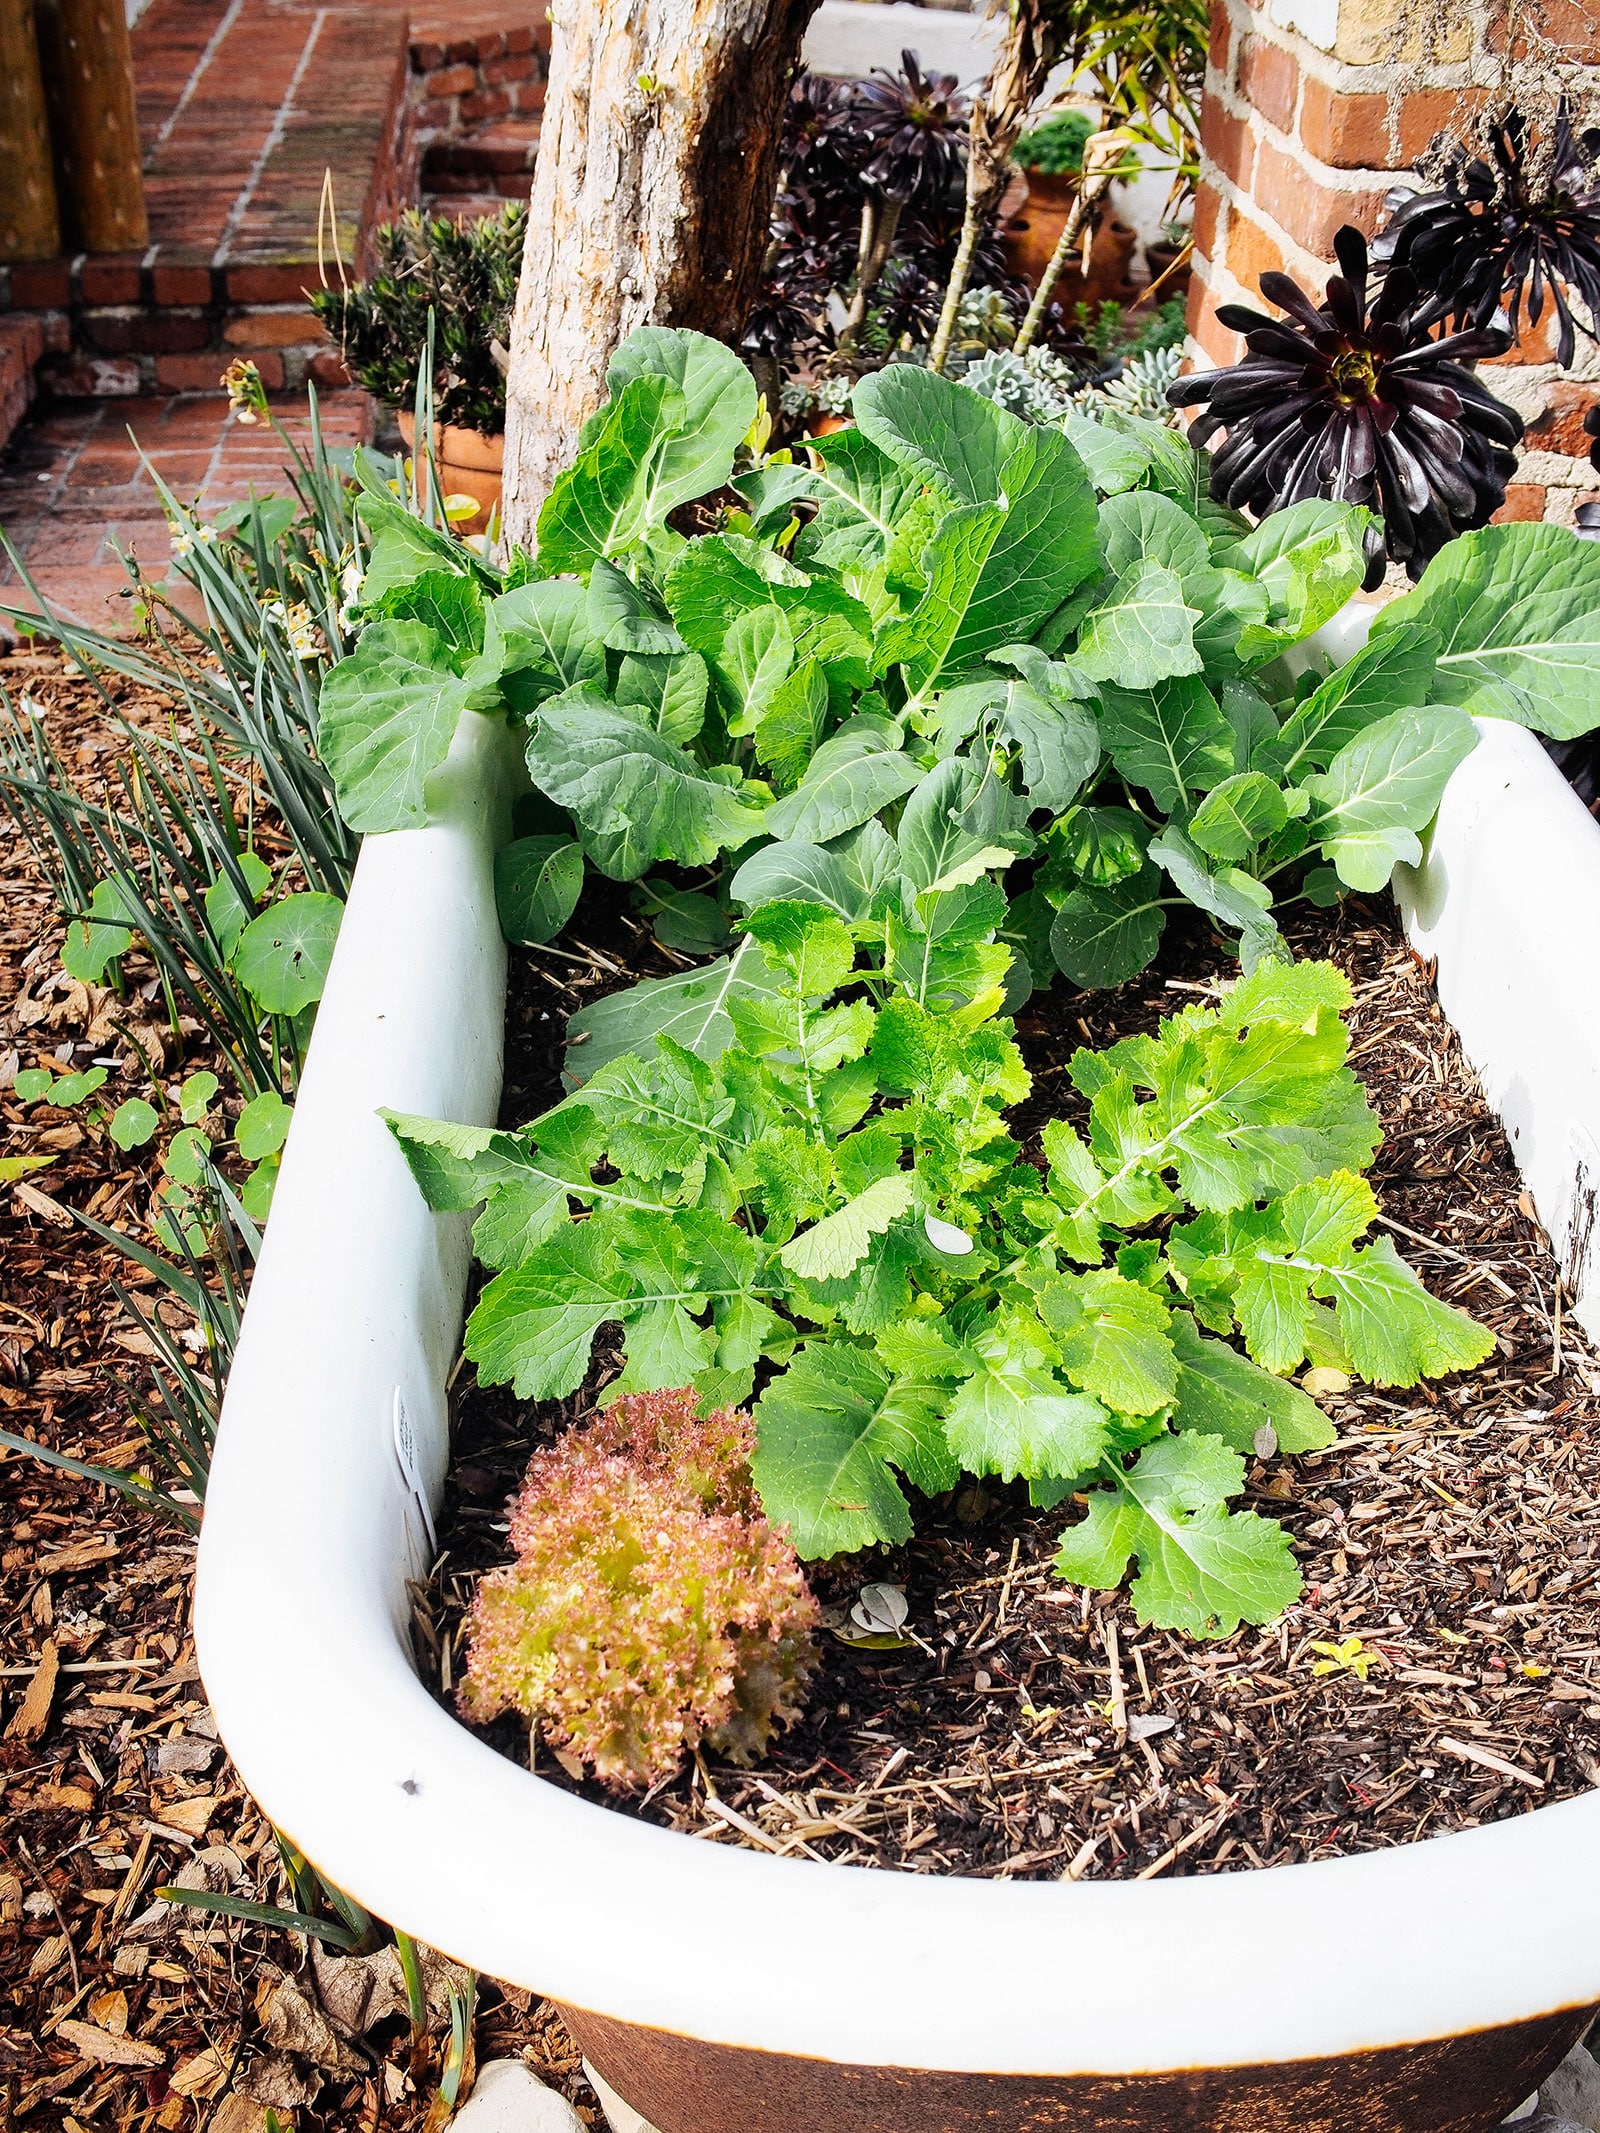 Bathtub planter filled with leafy greens and bark mulch